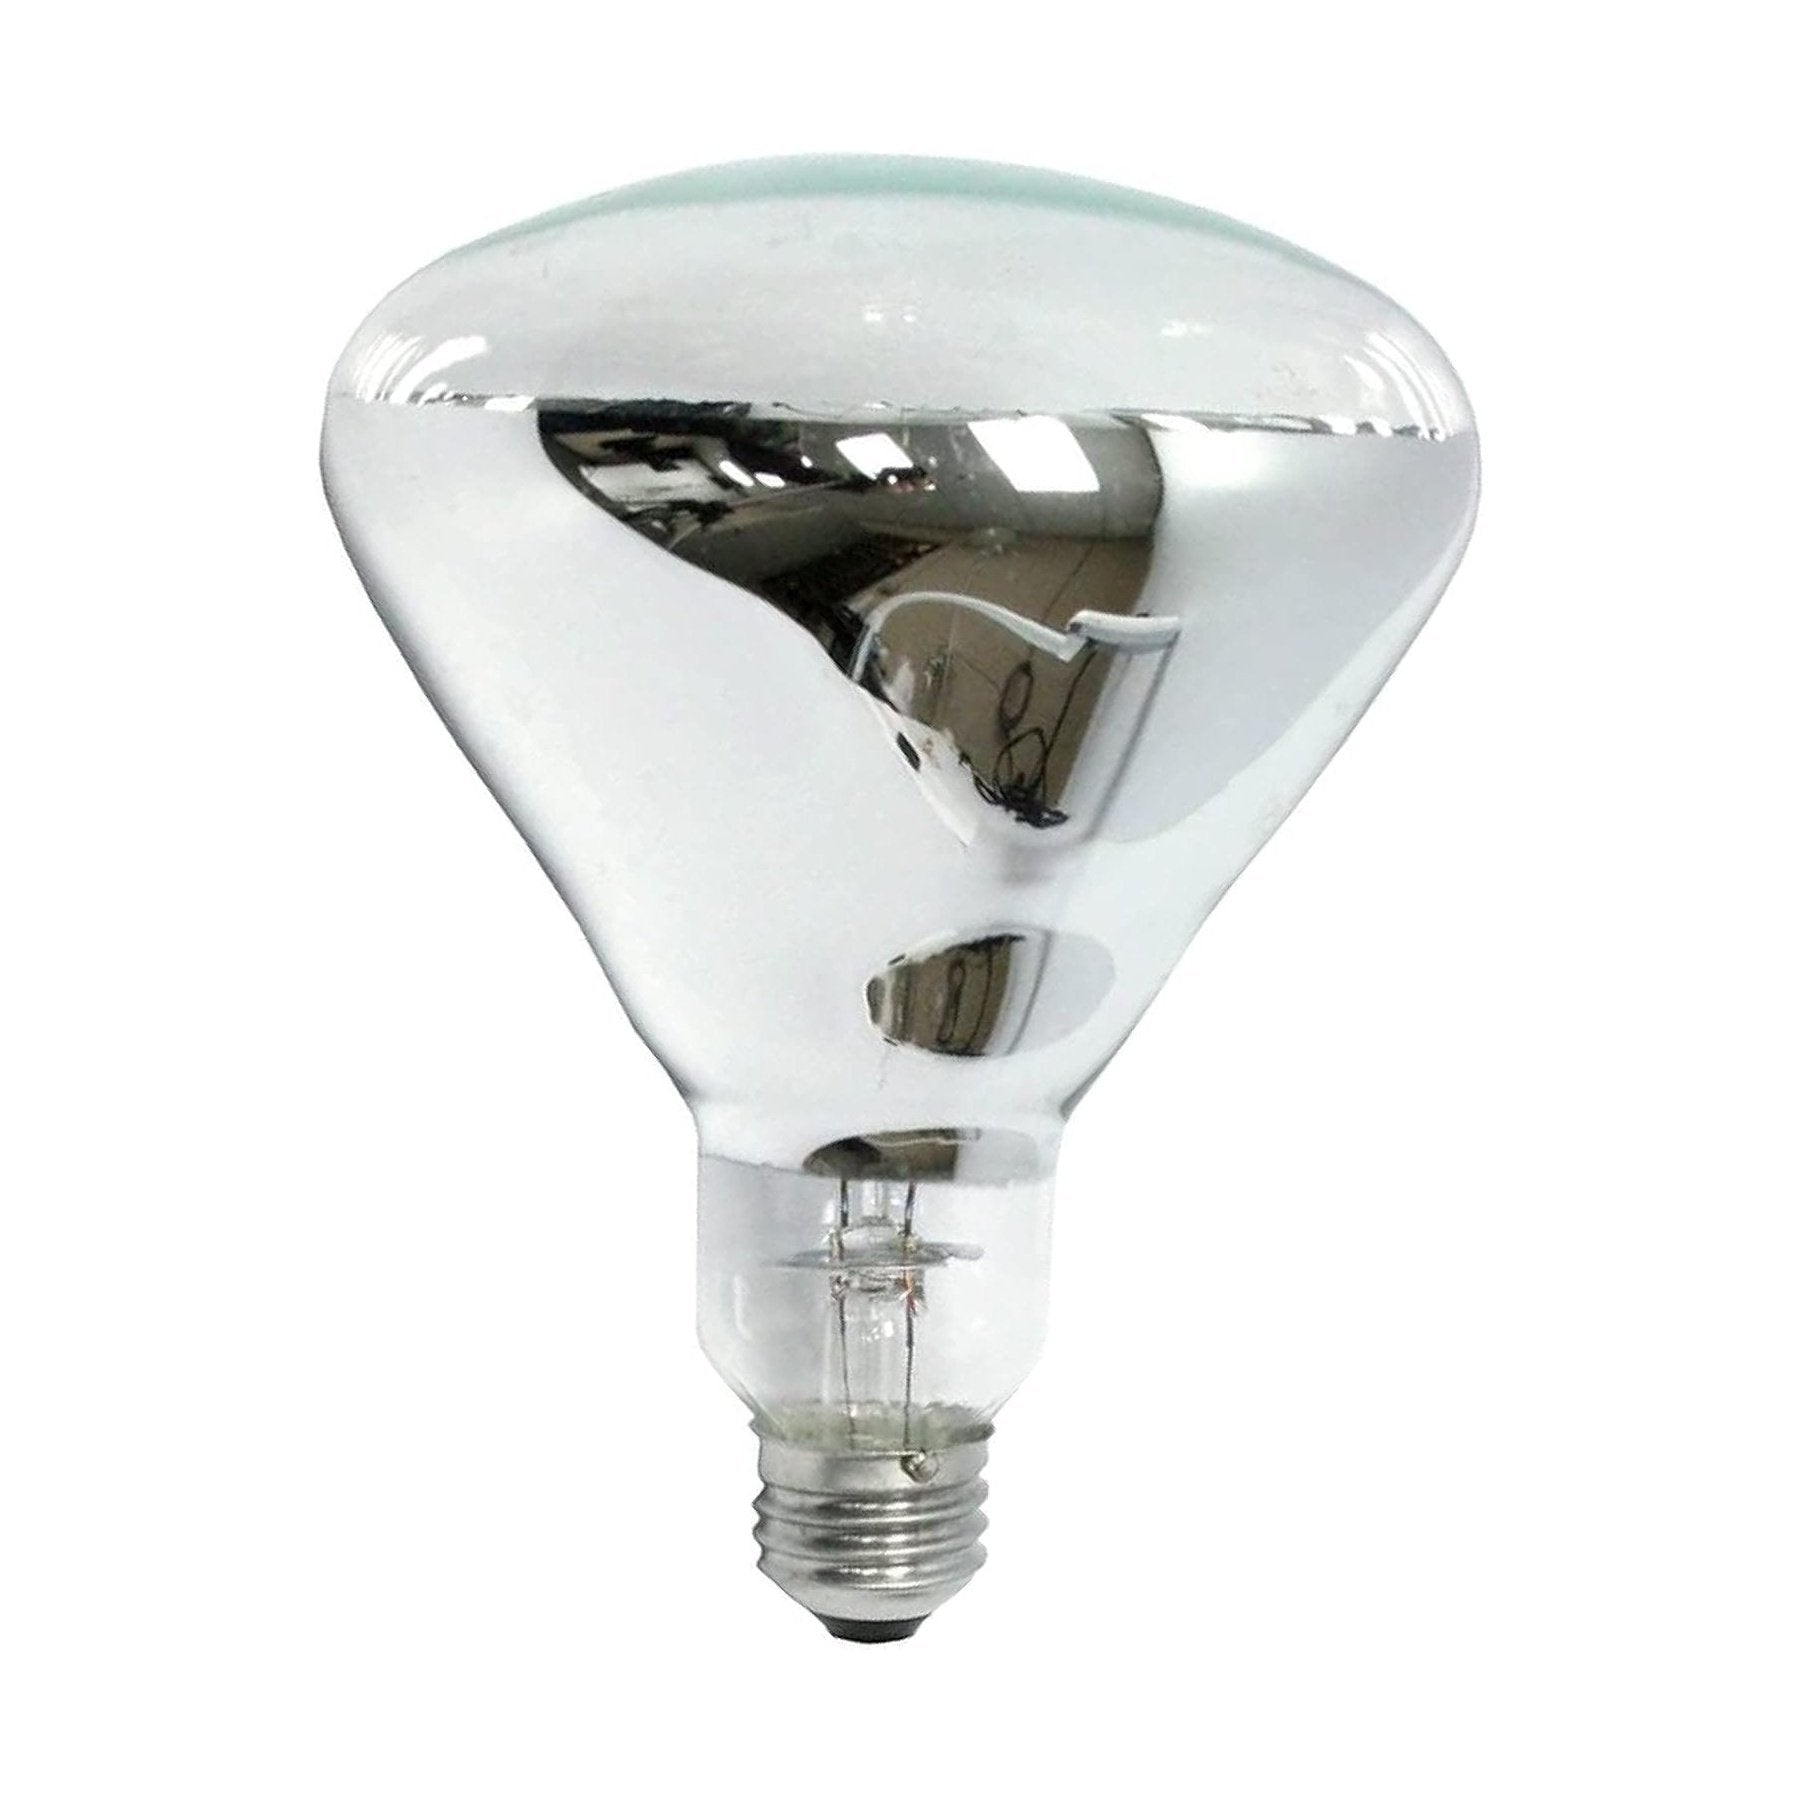 Sylvania - Infrared heat bulb, 250w (clear) 